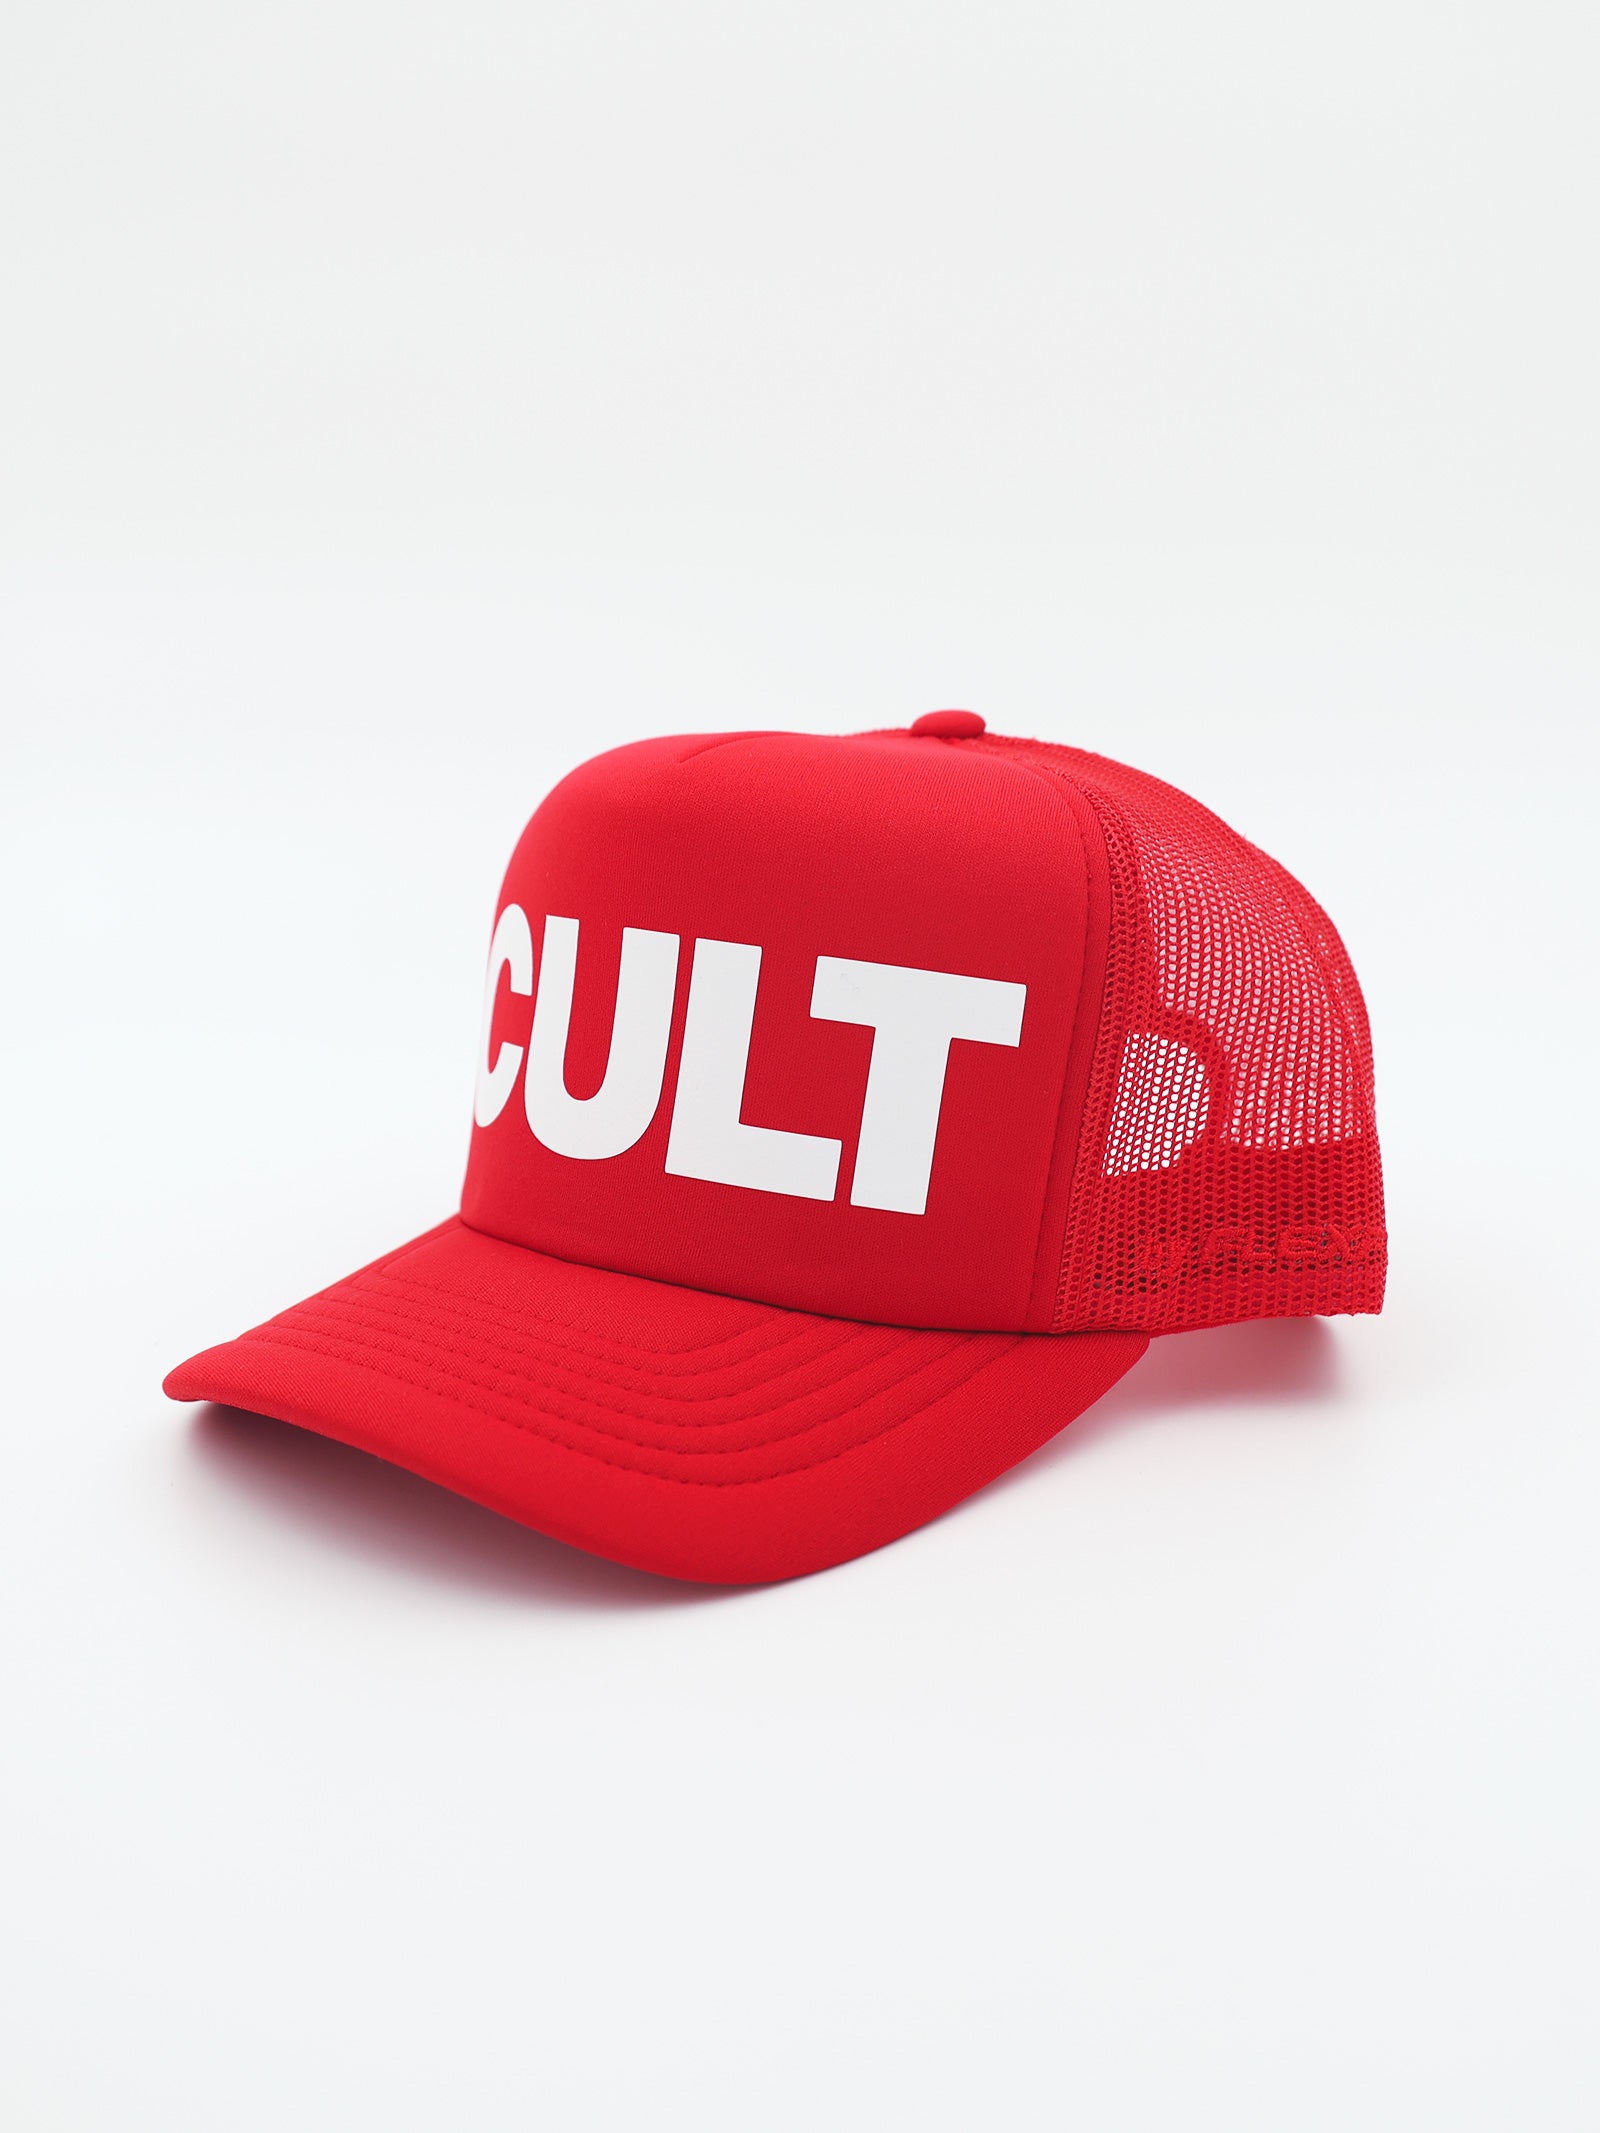 Red Cult Trucker Cap